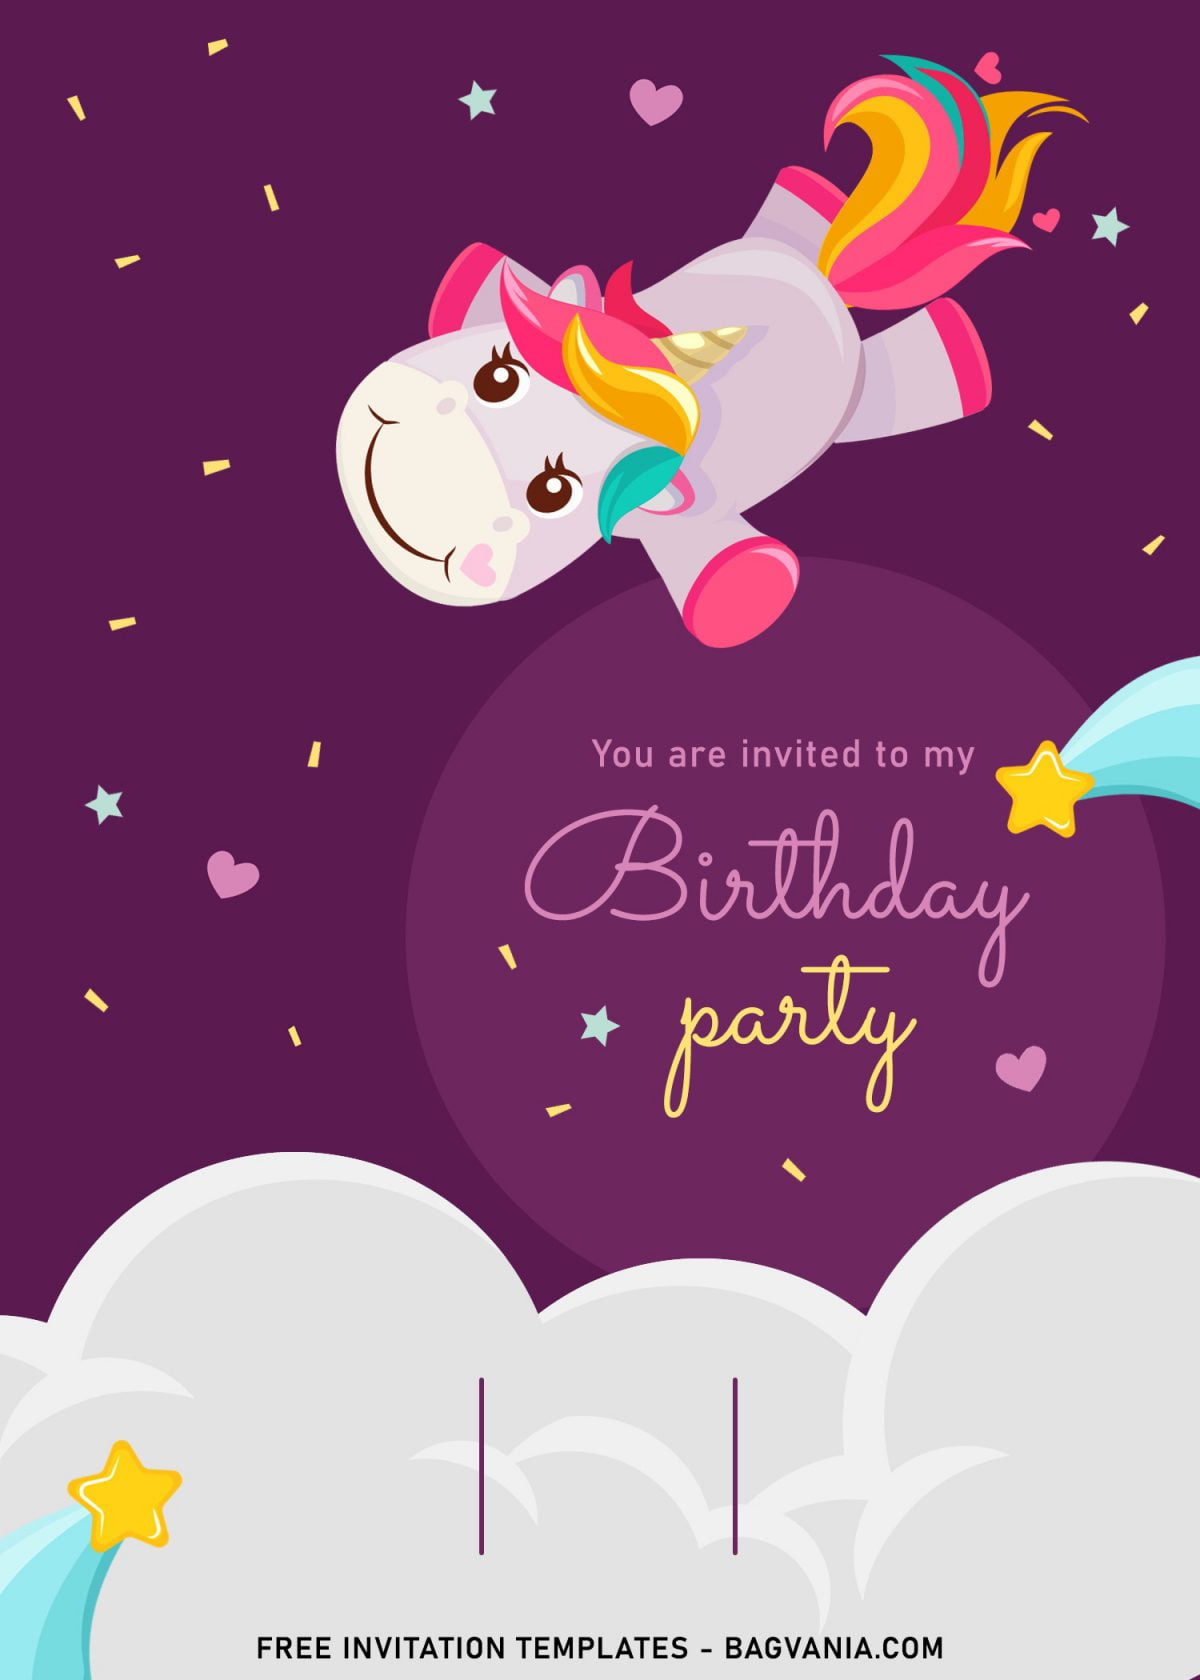 7+ Magical Rainbow Unicorn Birthday Invitation Templates For Kids Birthday Party and has portrait design